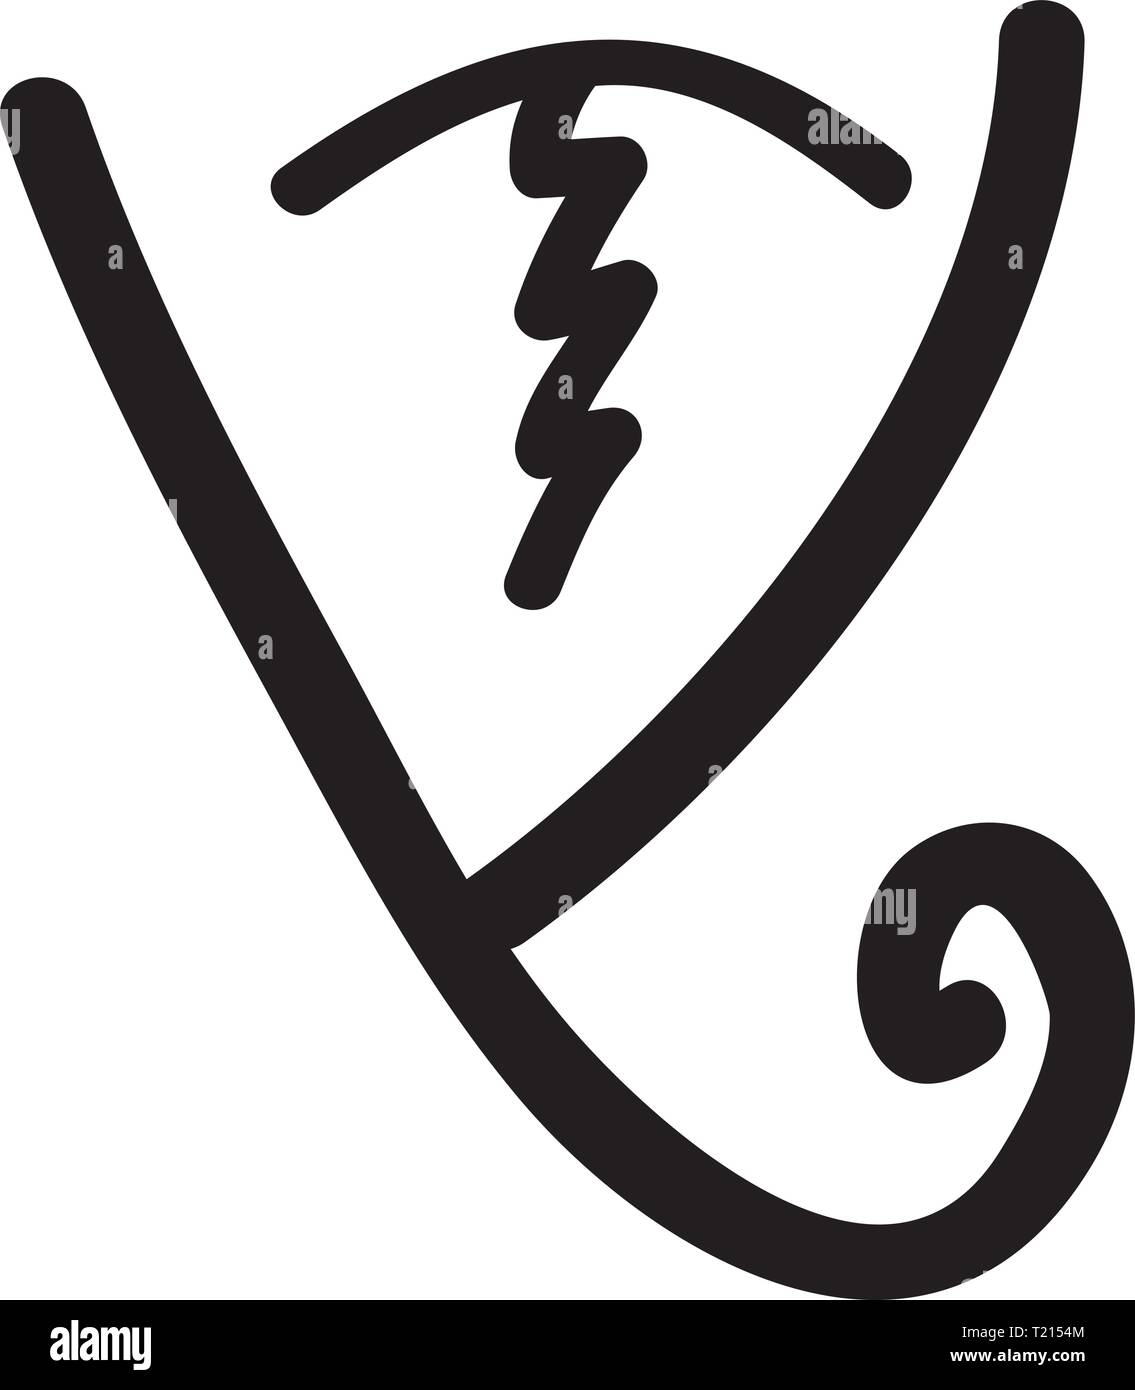 Raiki symbole Dumo Illustration de Vecteur